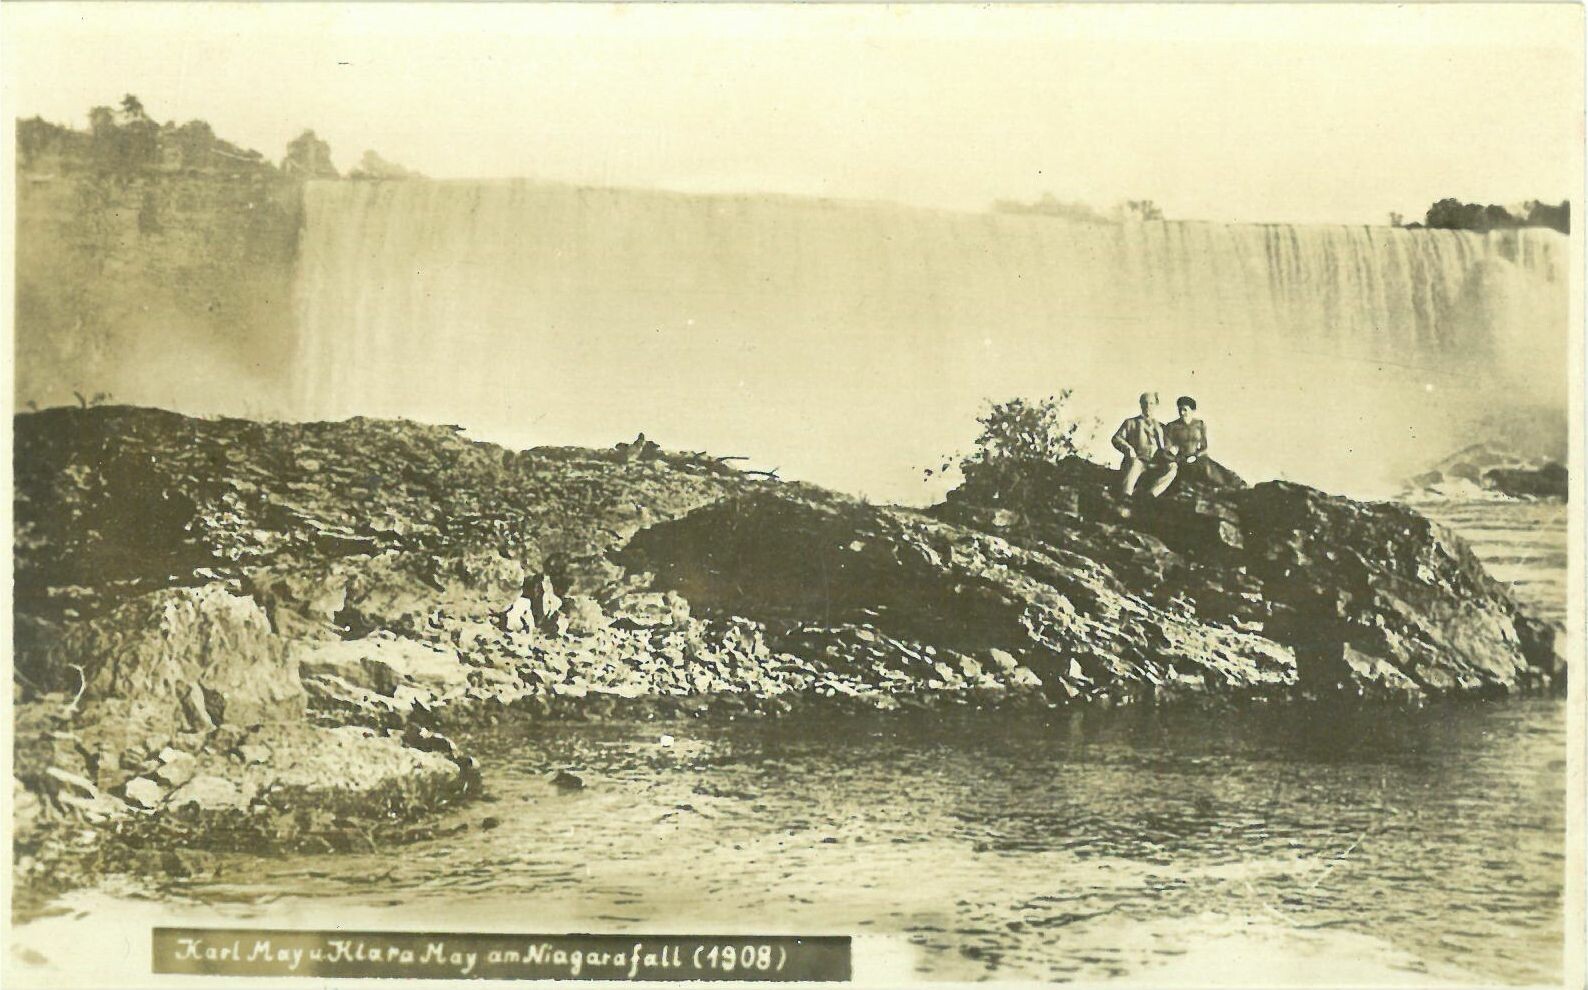 Karl May Karte; Karl May und Klara am Niagarafall (1908) (Karl-May-Museum gGmbH RR-R)